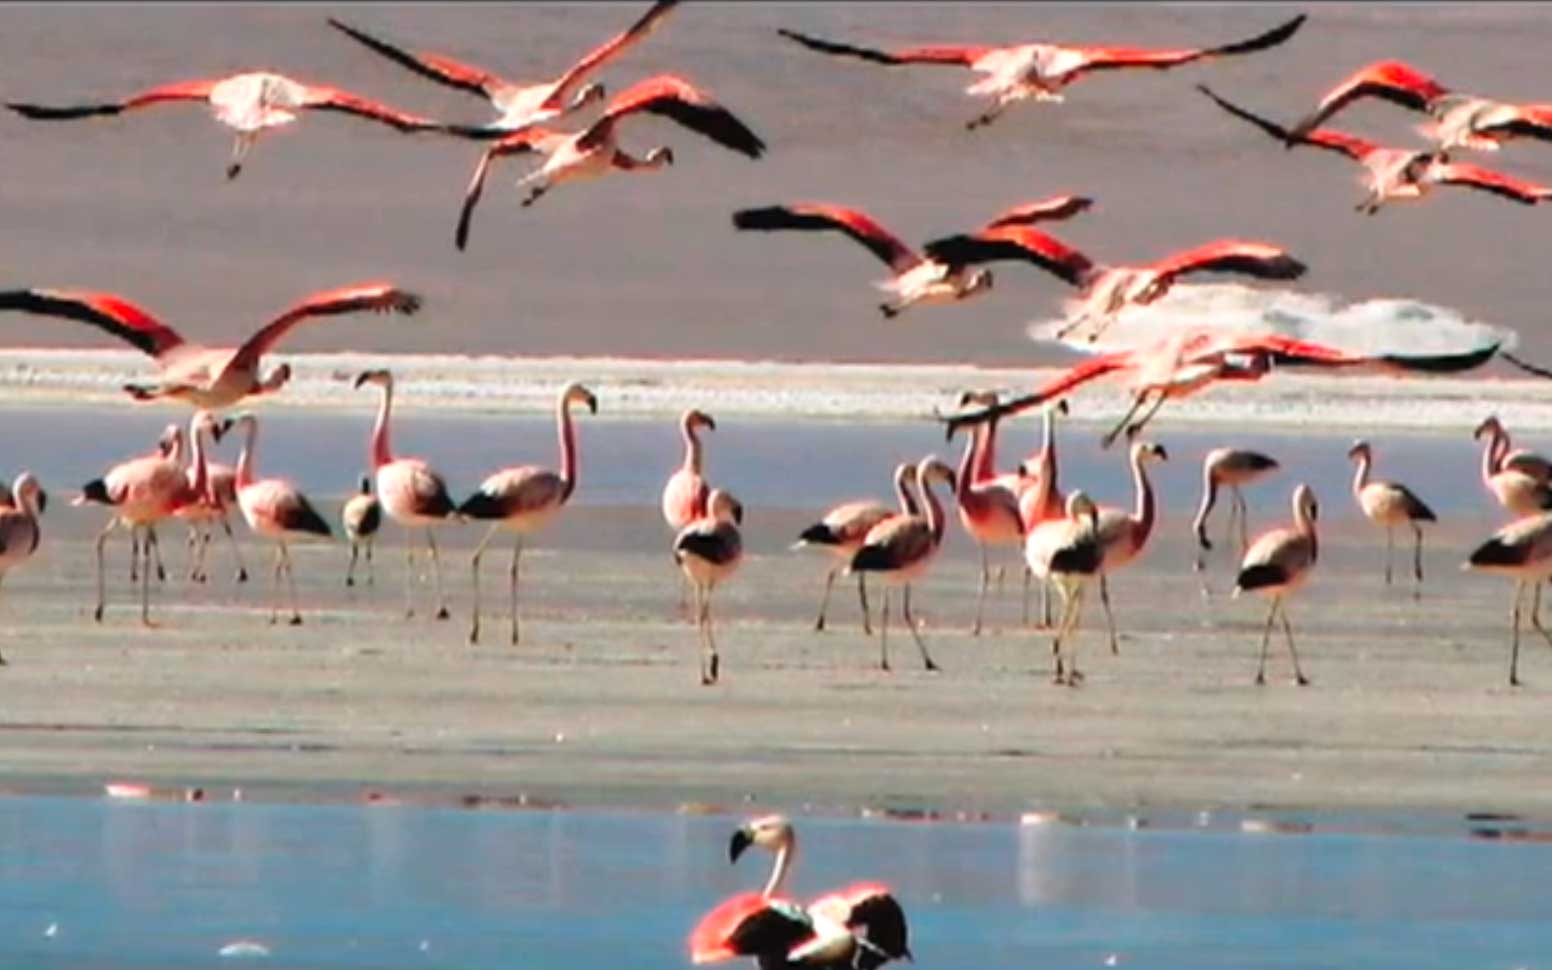 Flamingos in Bolivia's Altiplano